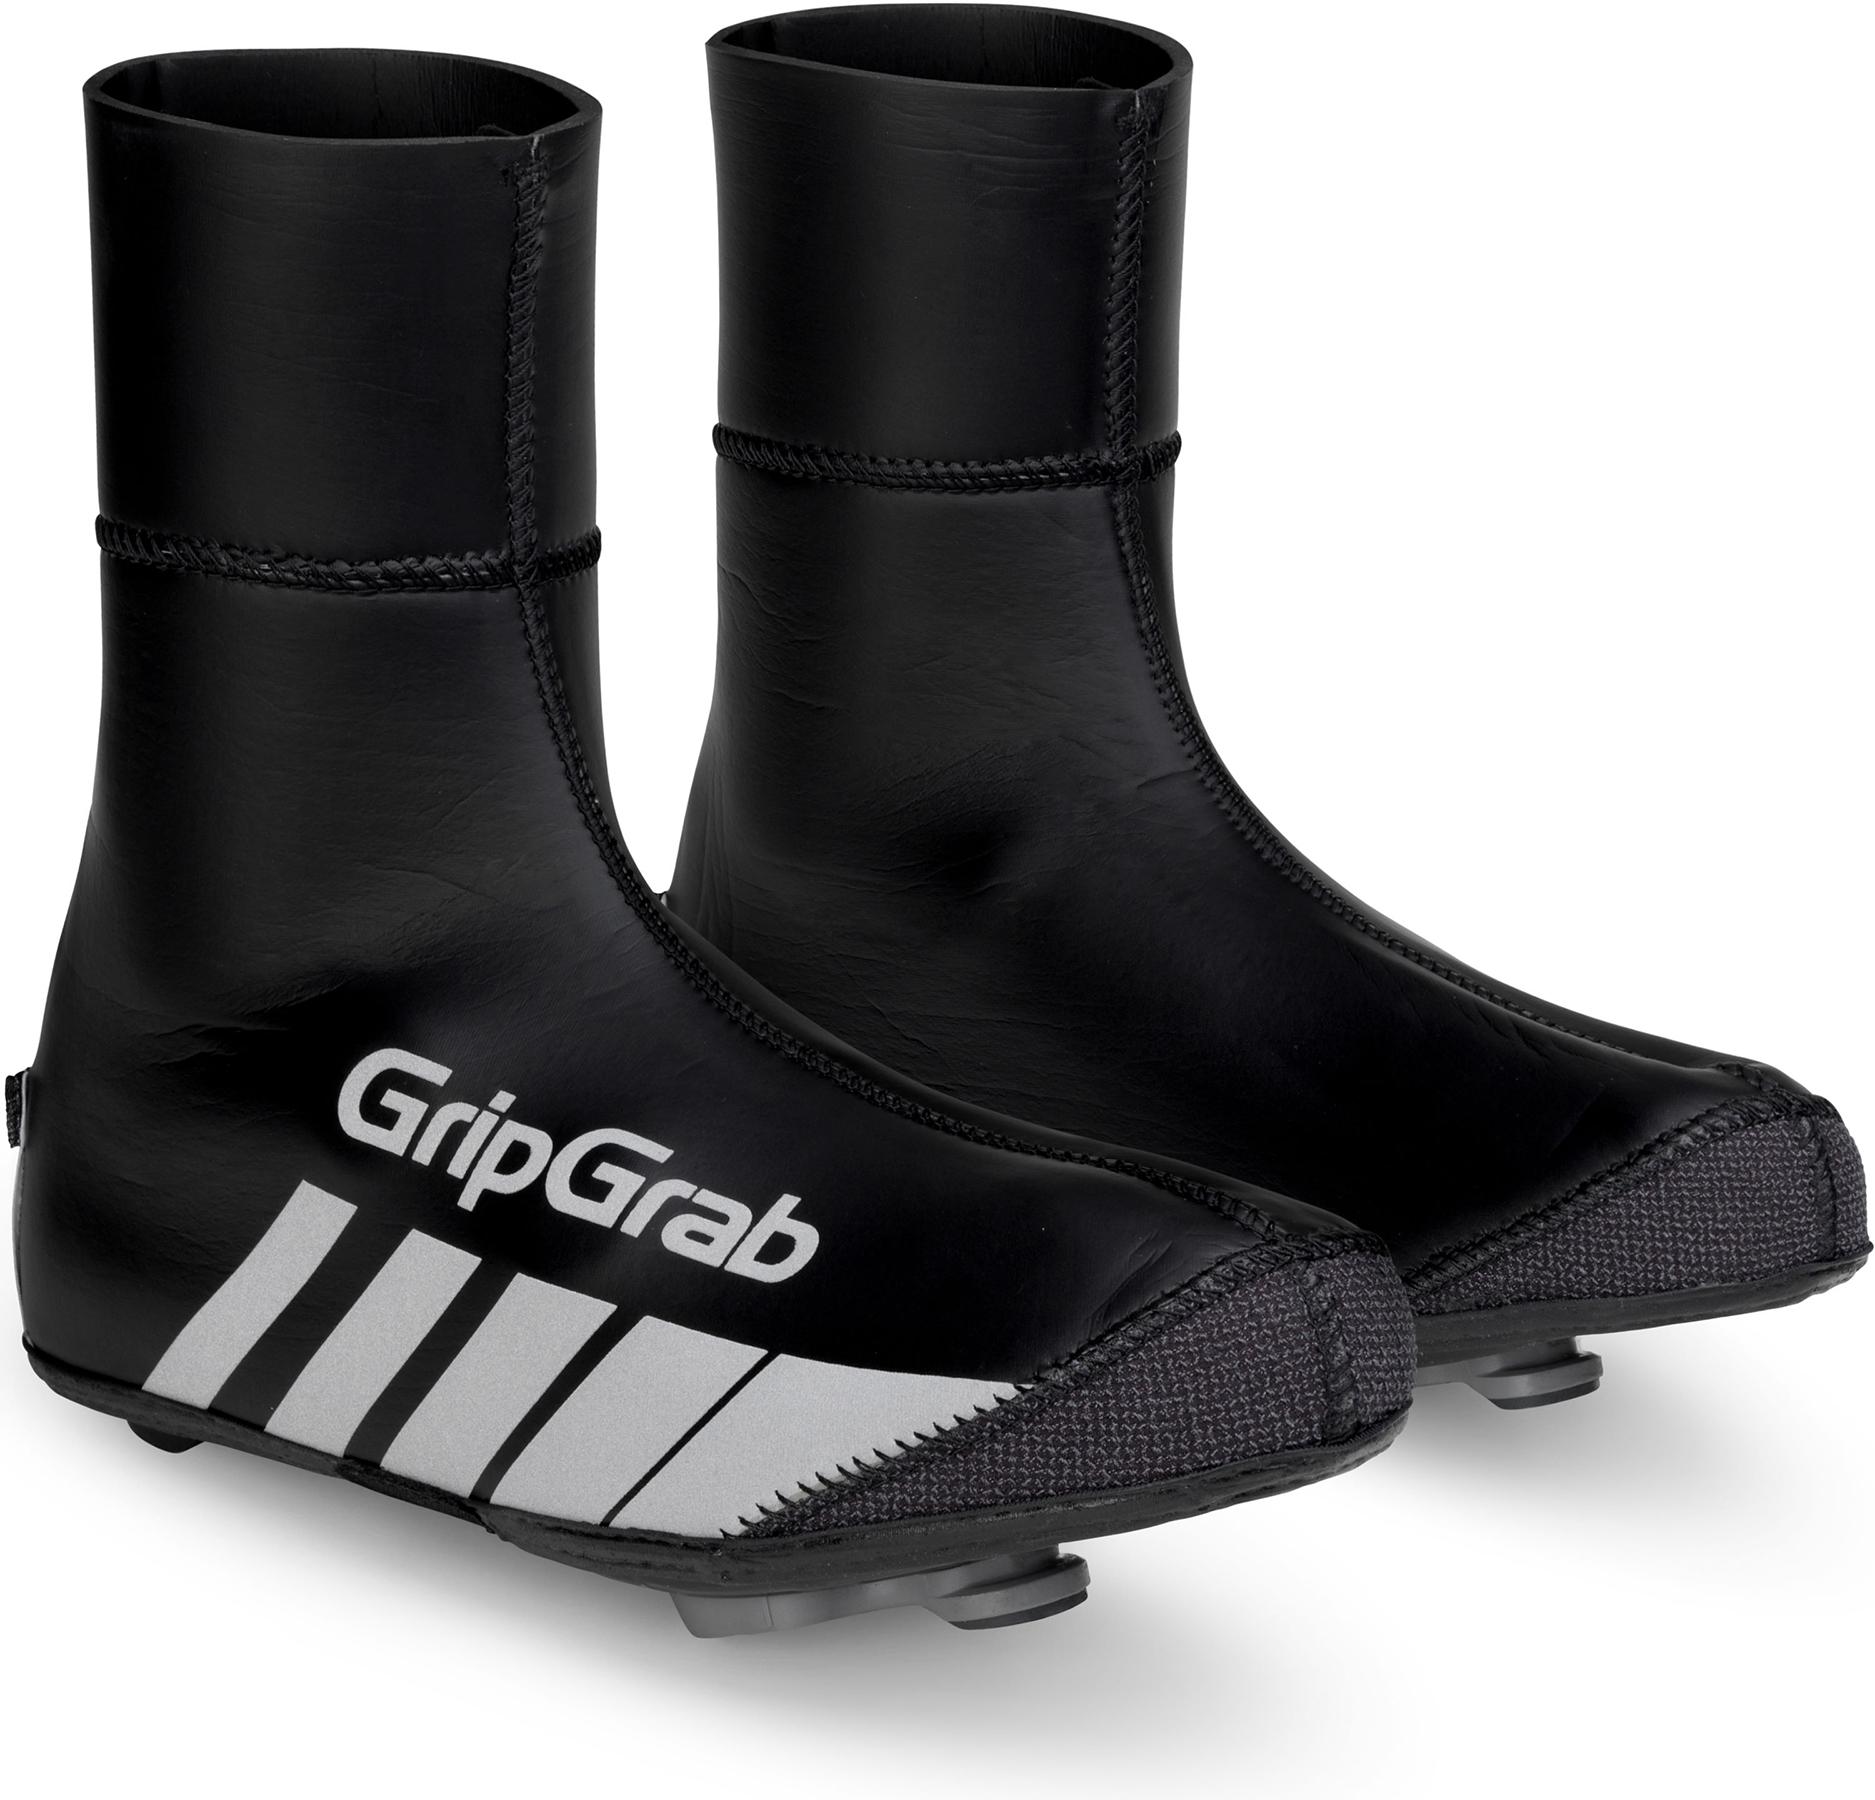 Gripgrab Racethermo Waterproof Winter Shoe Cover - Black